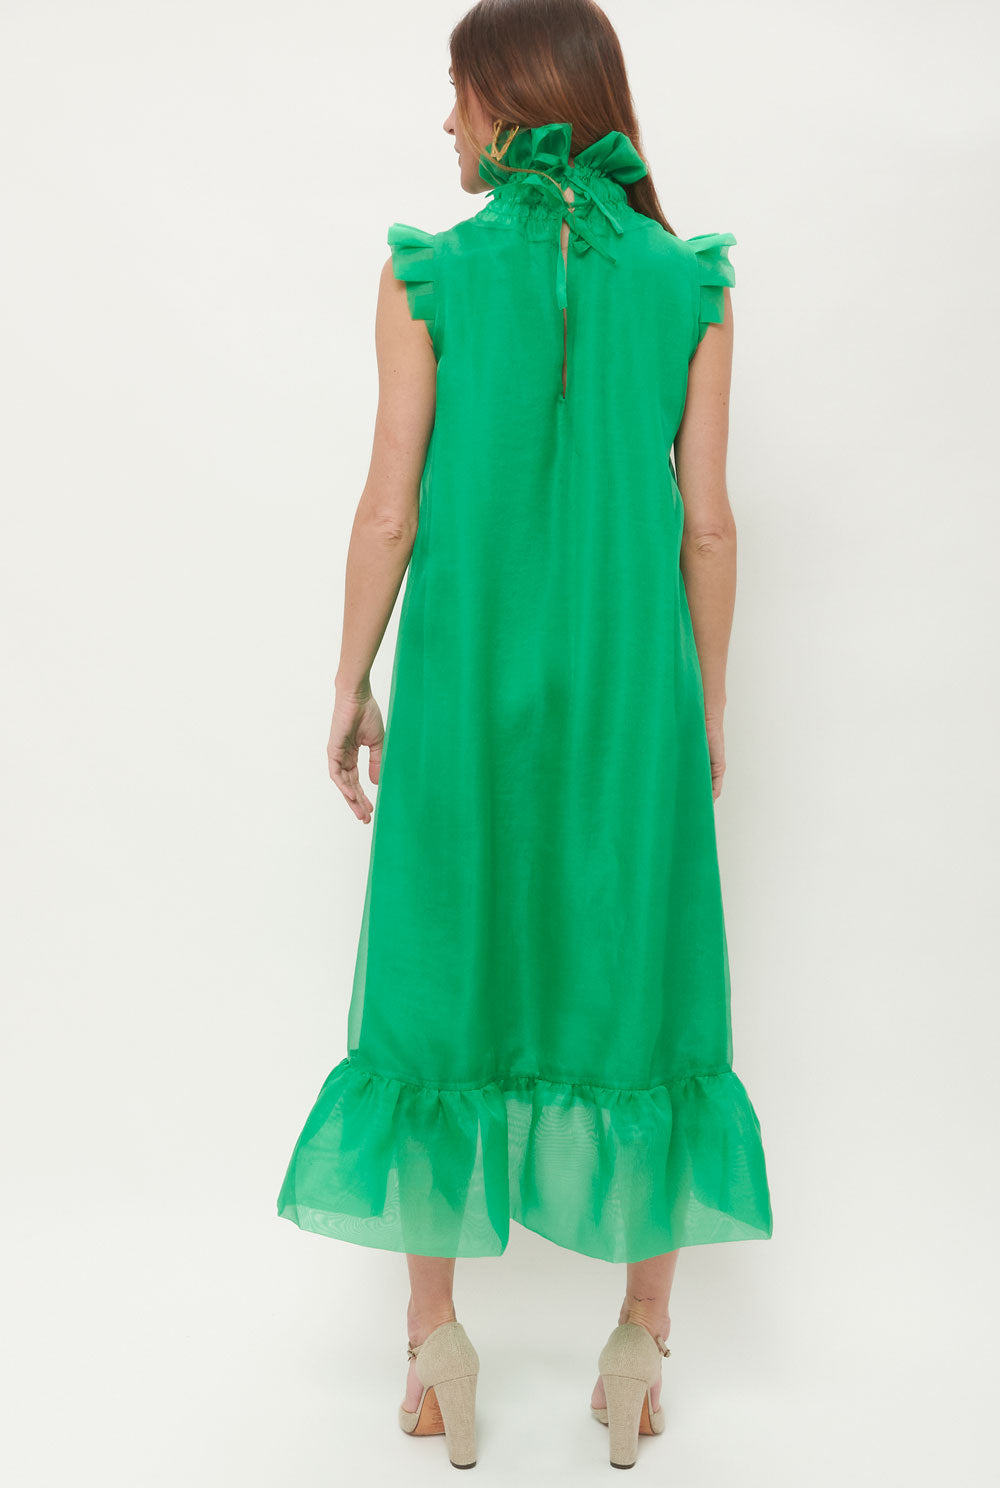 Andrea organza green midi dress Dresses Diddo Madrid 